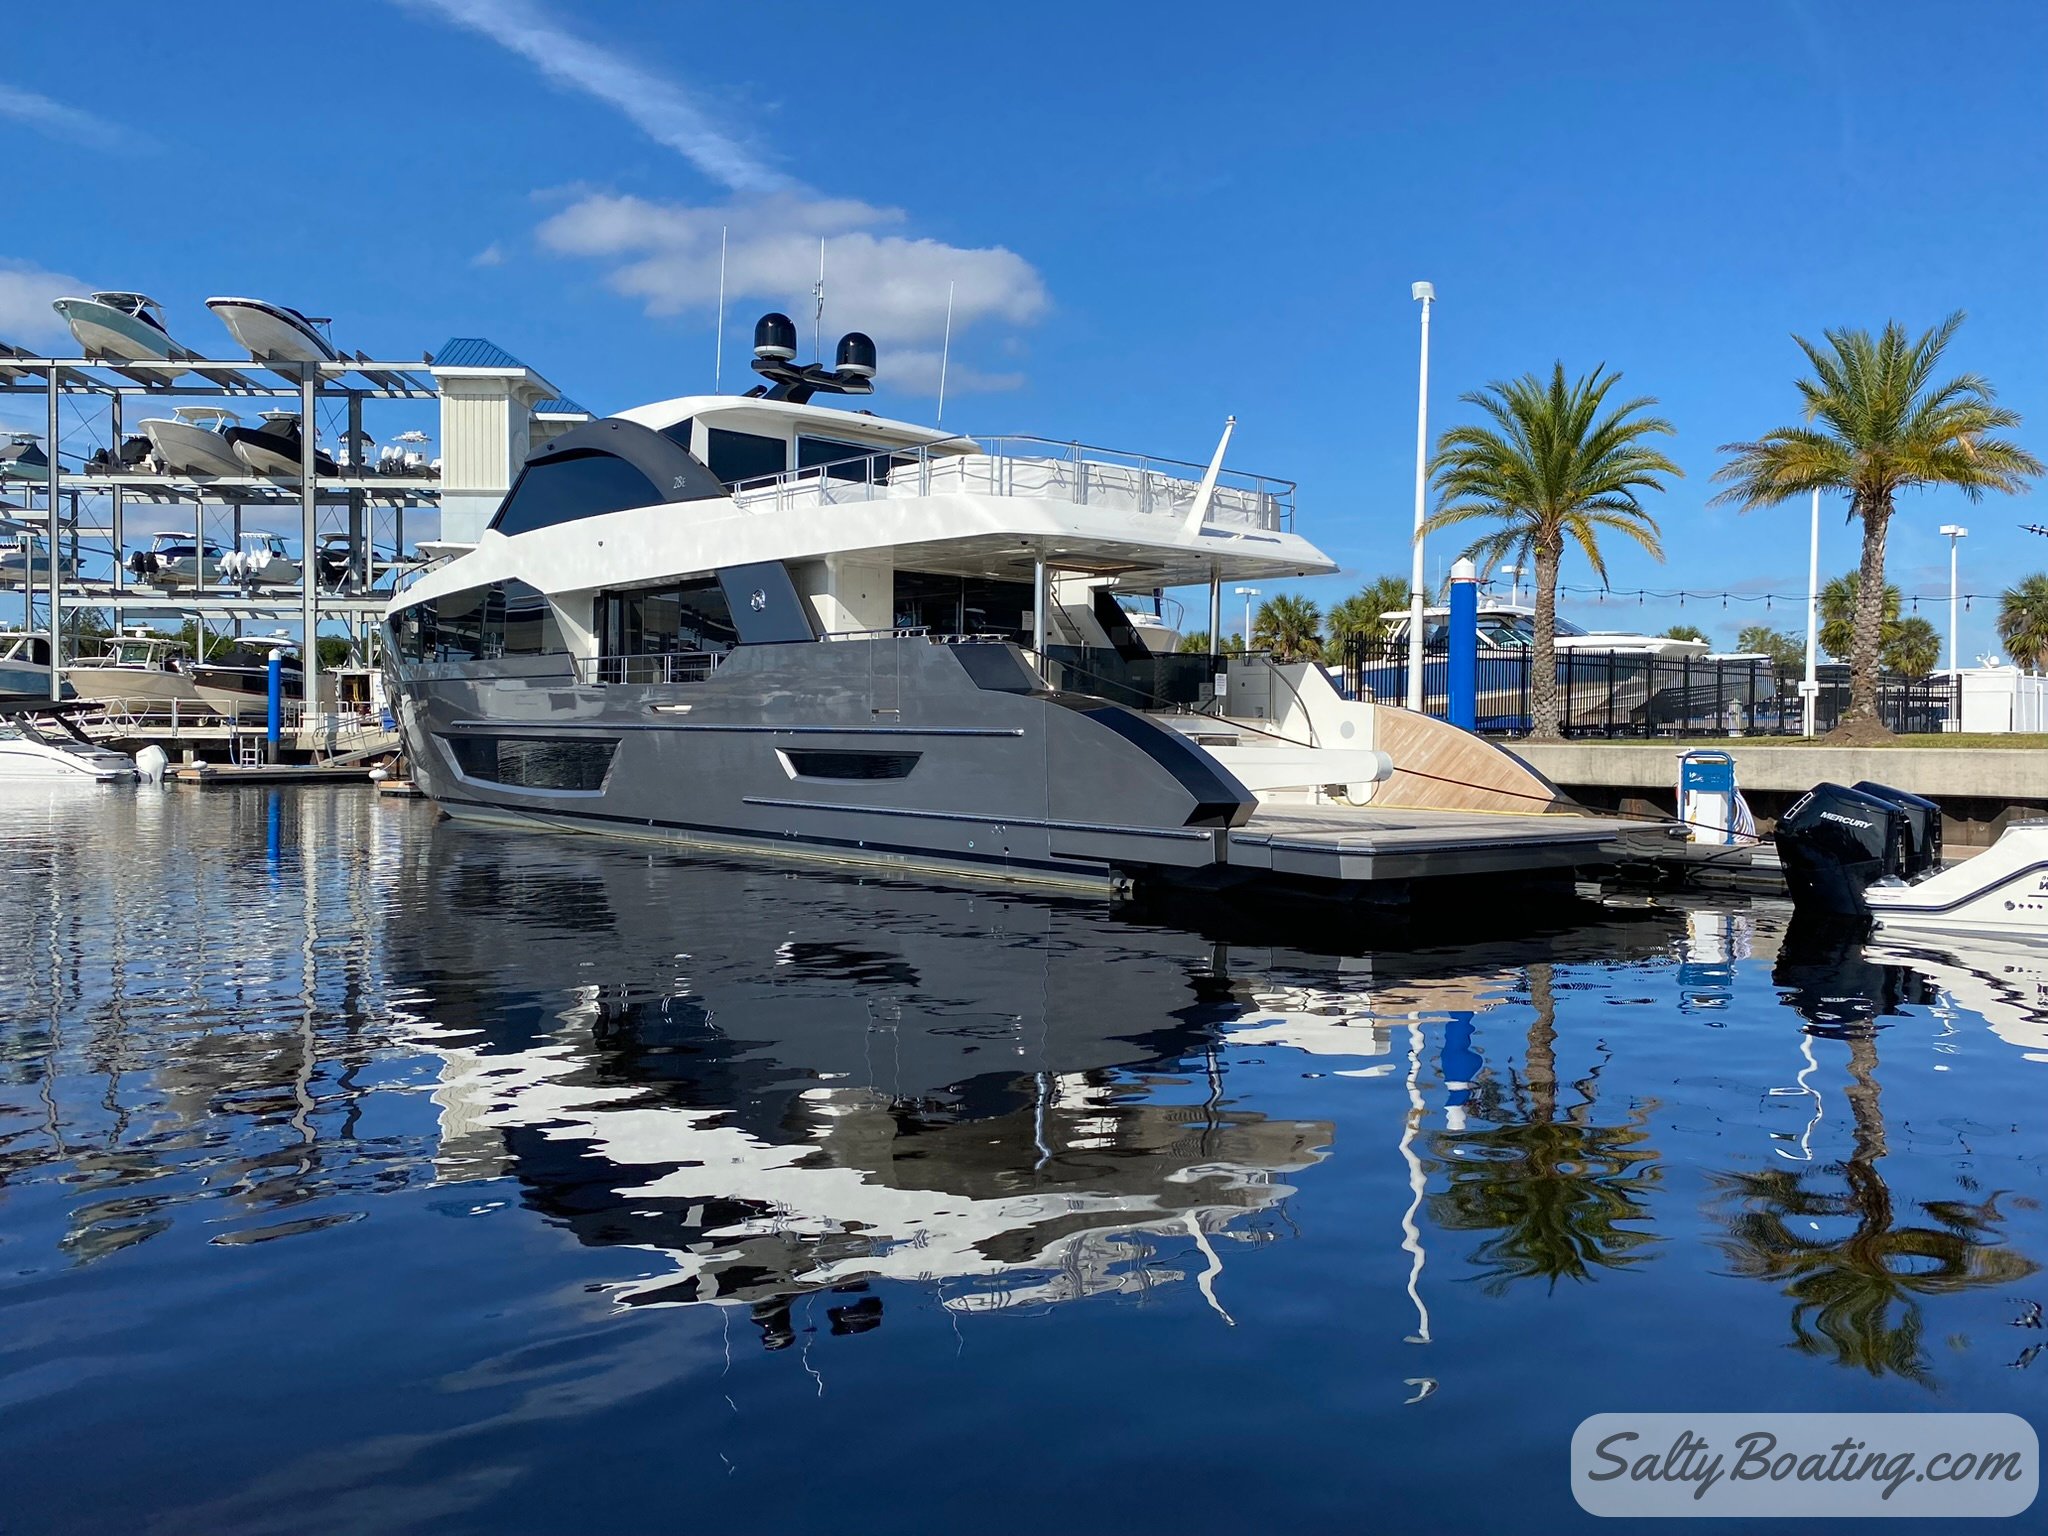 This beautiful unique luxury cruiser was at Deep Lagoon Restaurant.